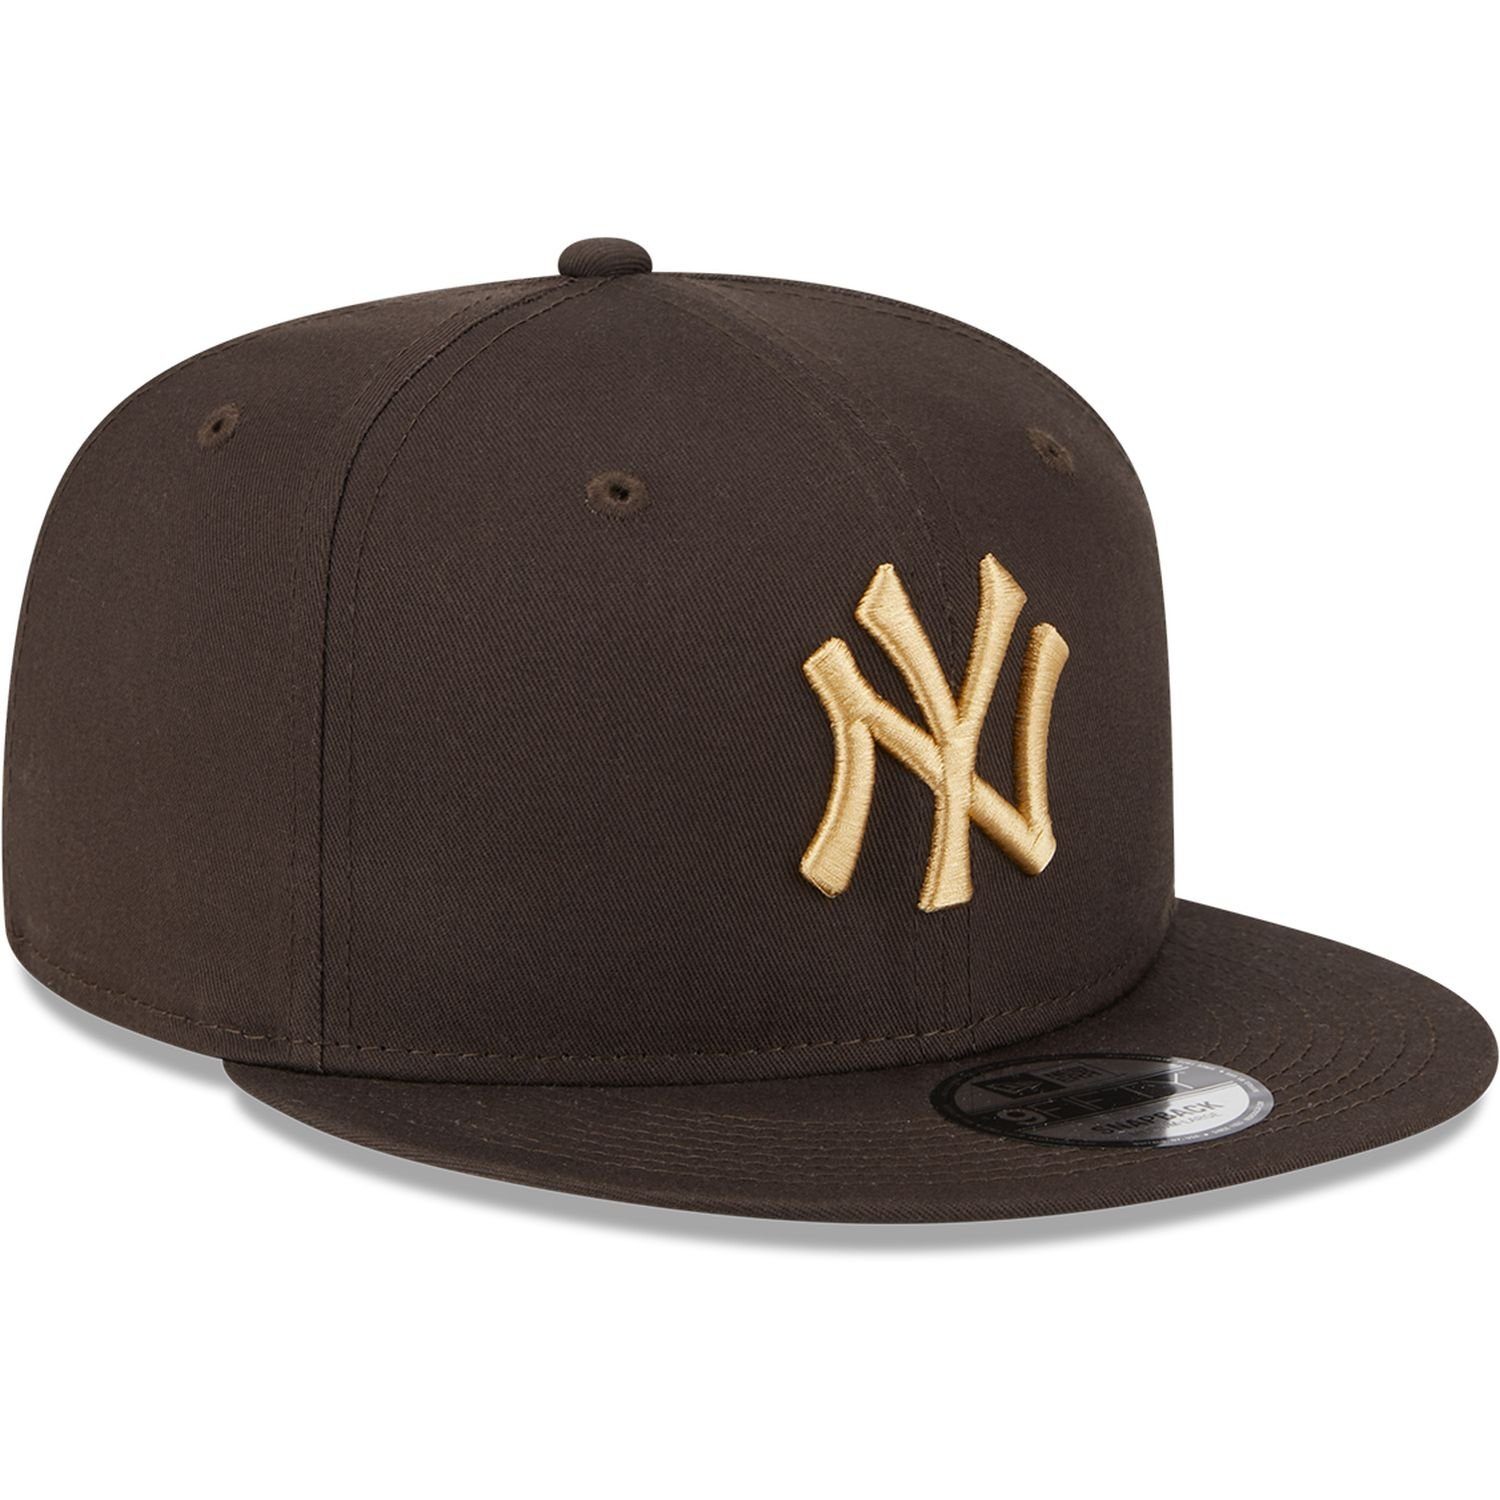 Era 9Fifty York New Snapback New Cap Yankees